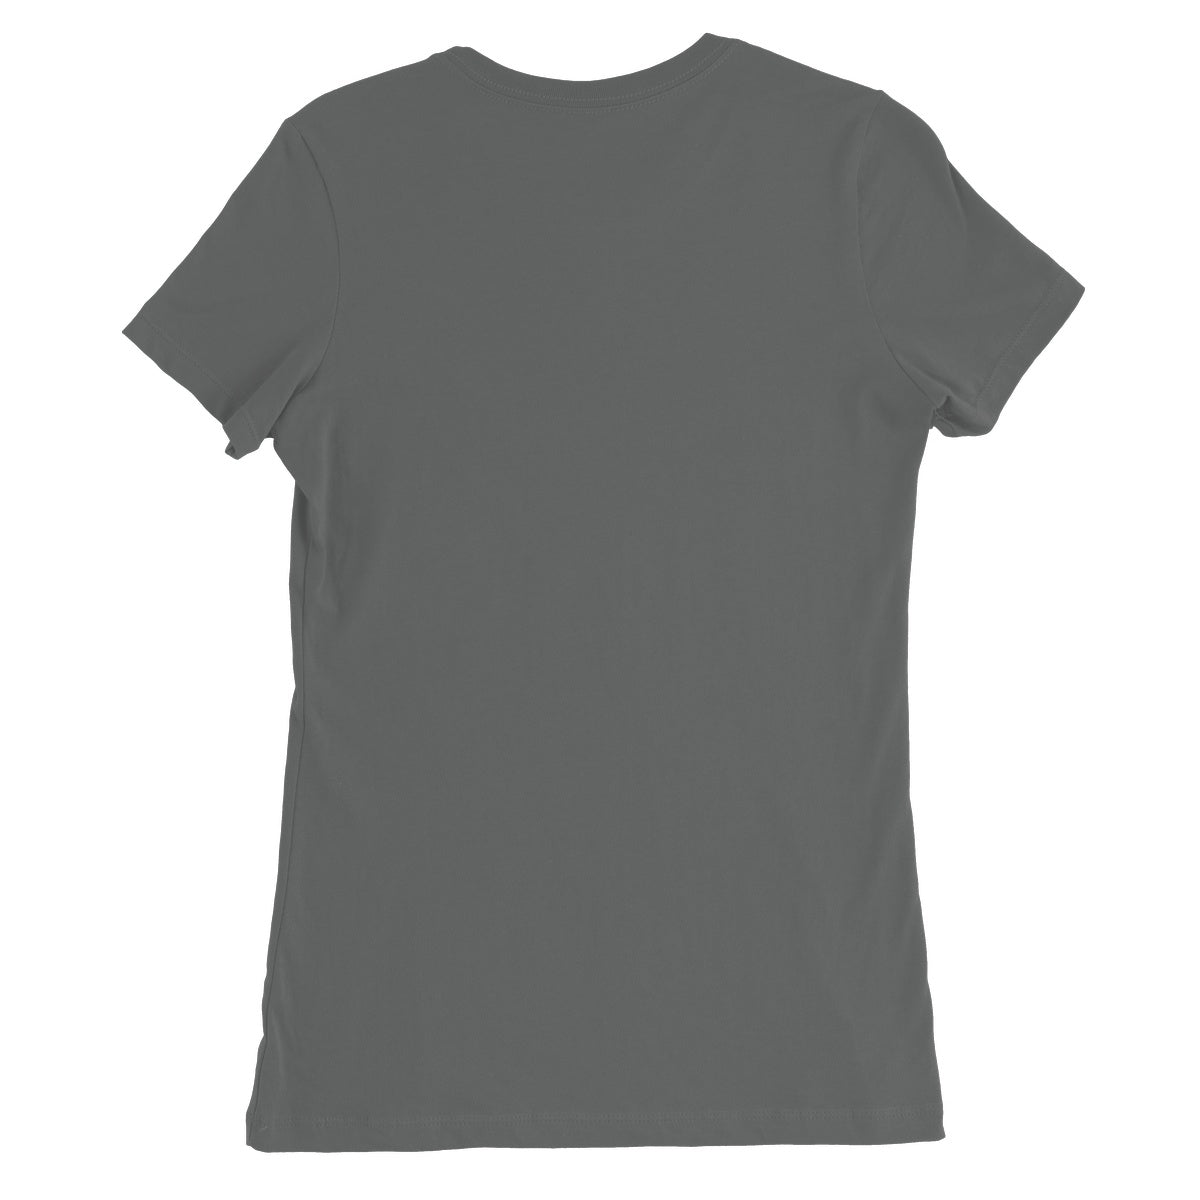 AQUA HMP F - Seasrider - Camiseta feminina de jérsei fino